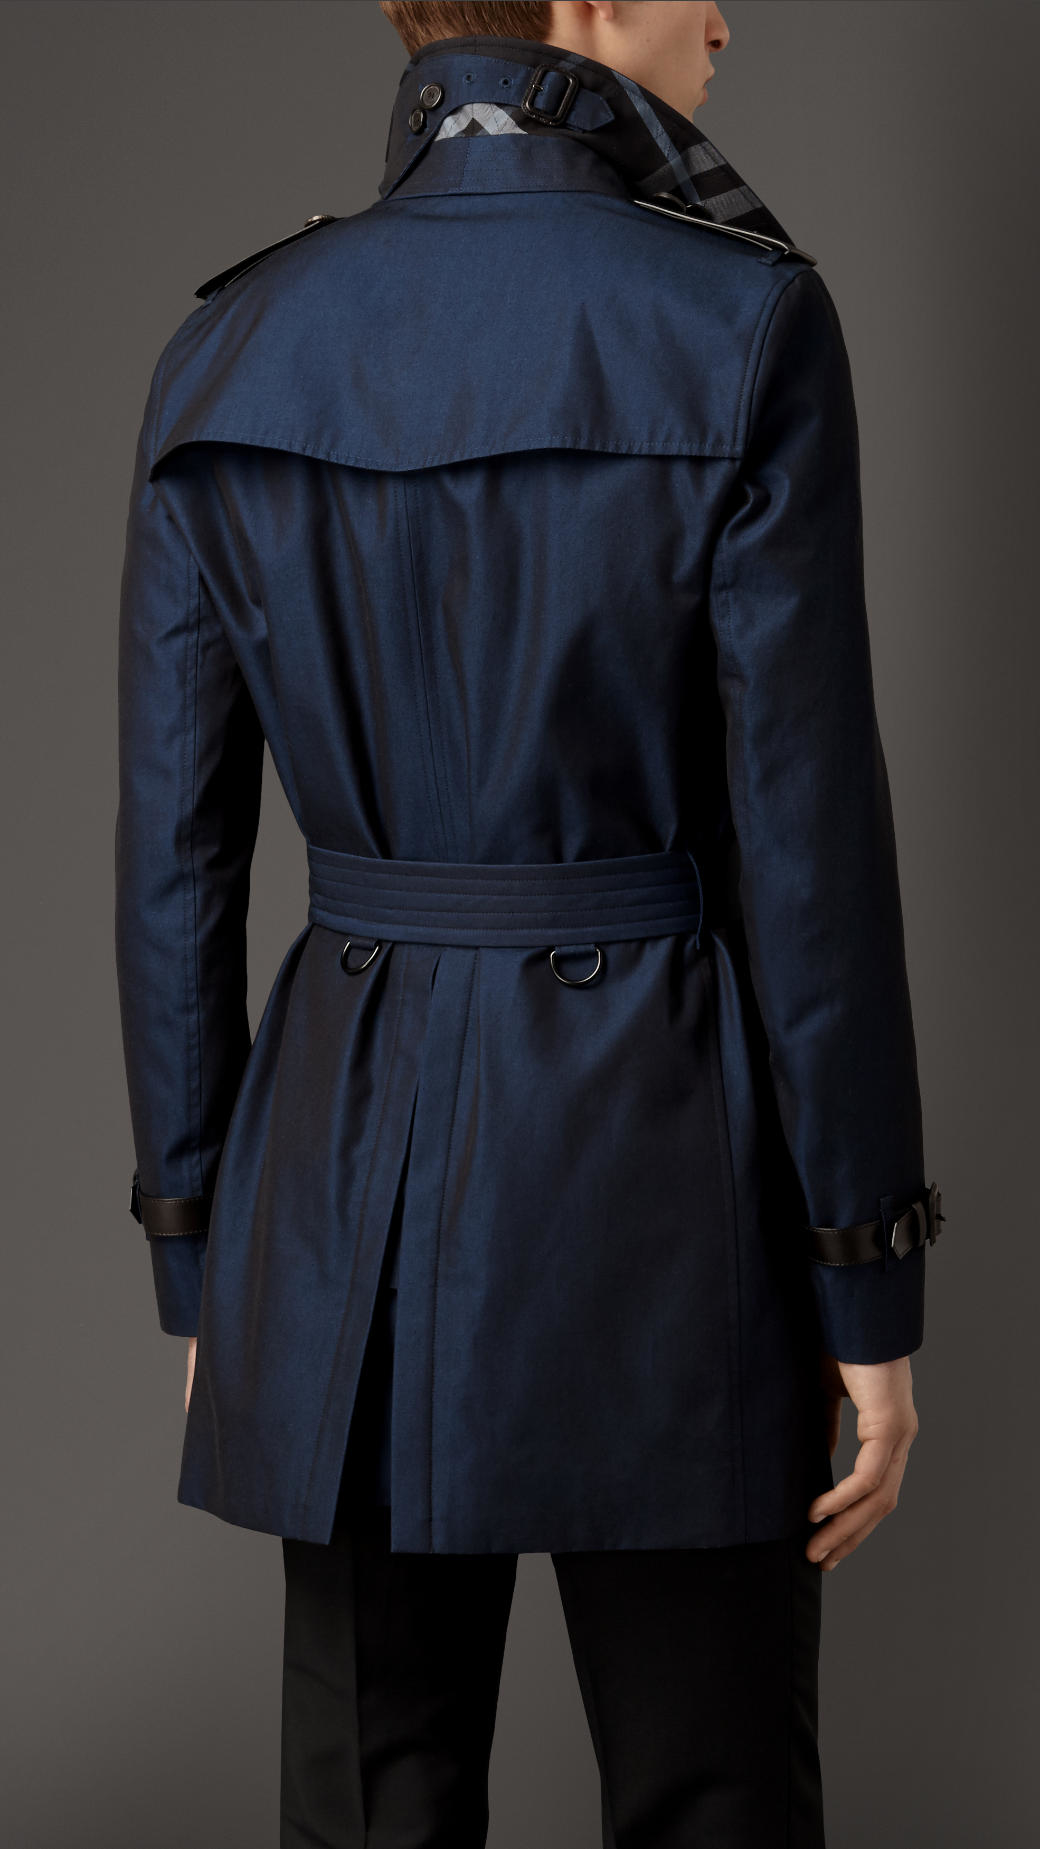 Burberry Leather Detail Cotton Gabardine Trench Coat in Blue for Men - Lyst